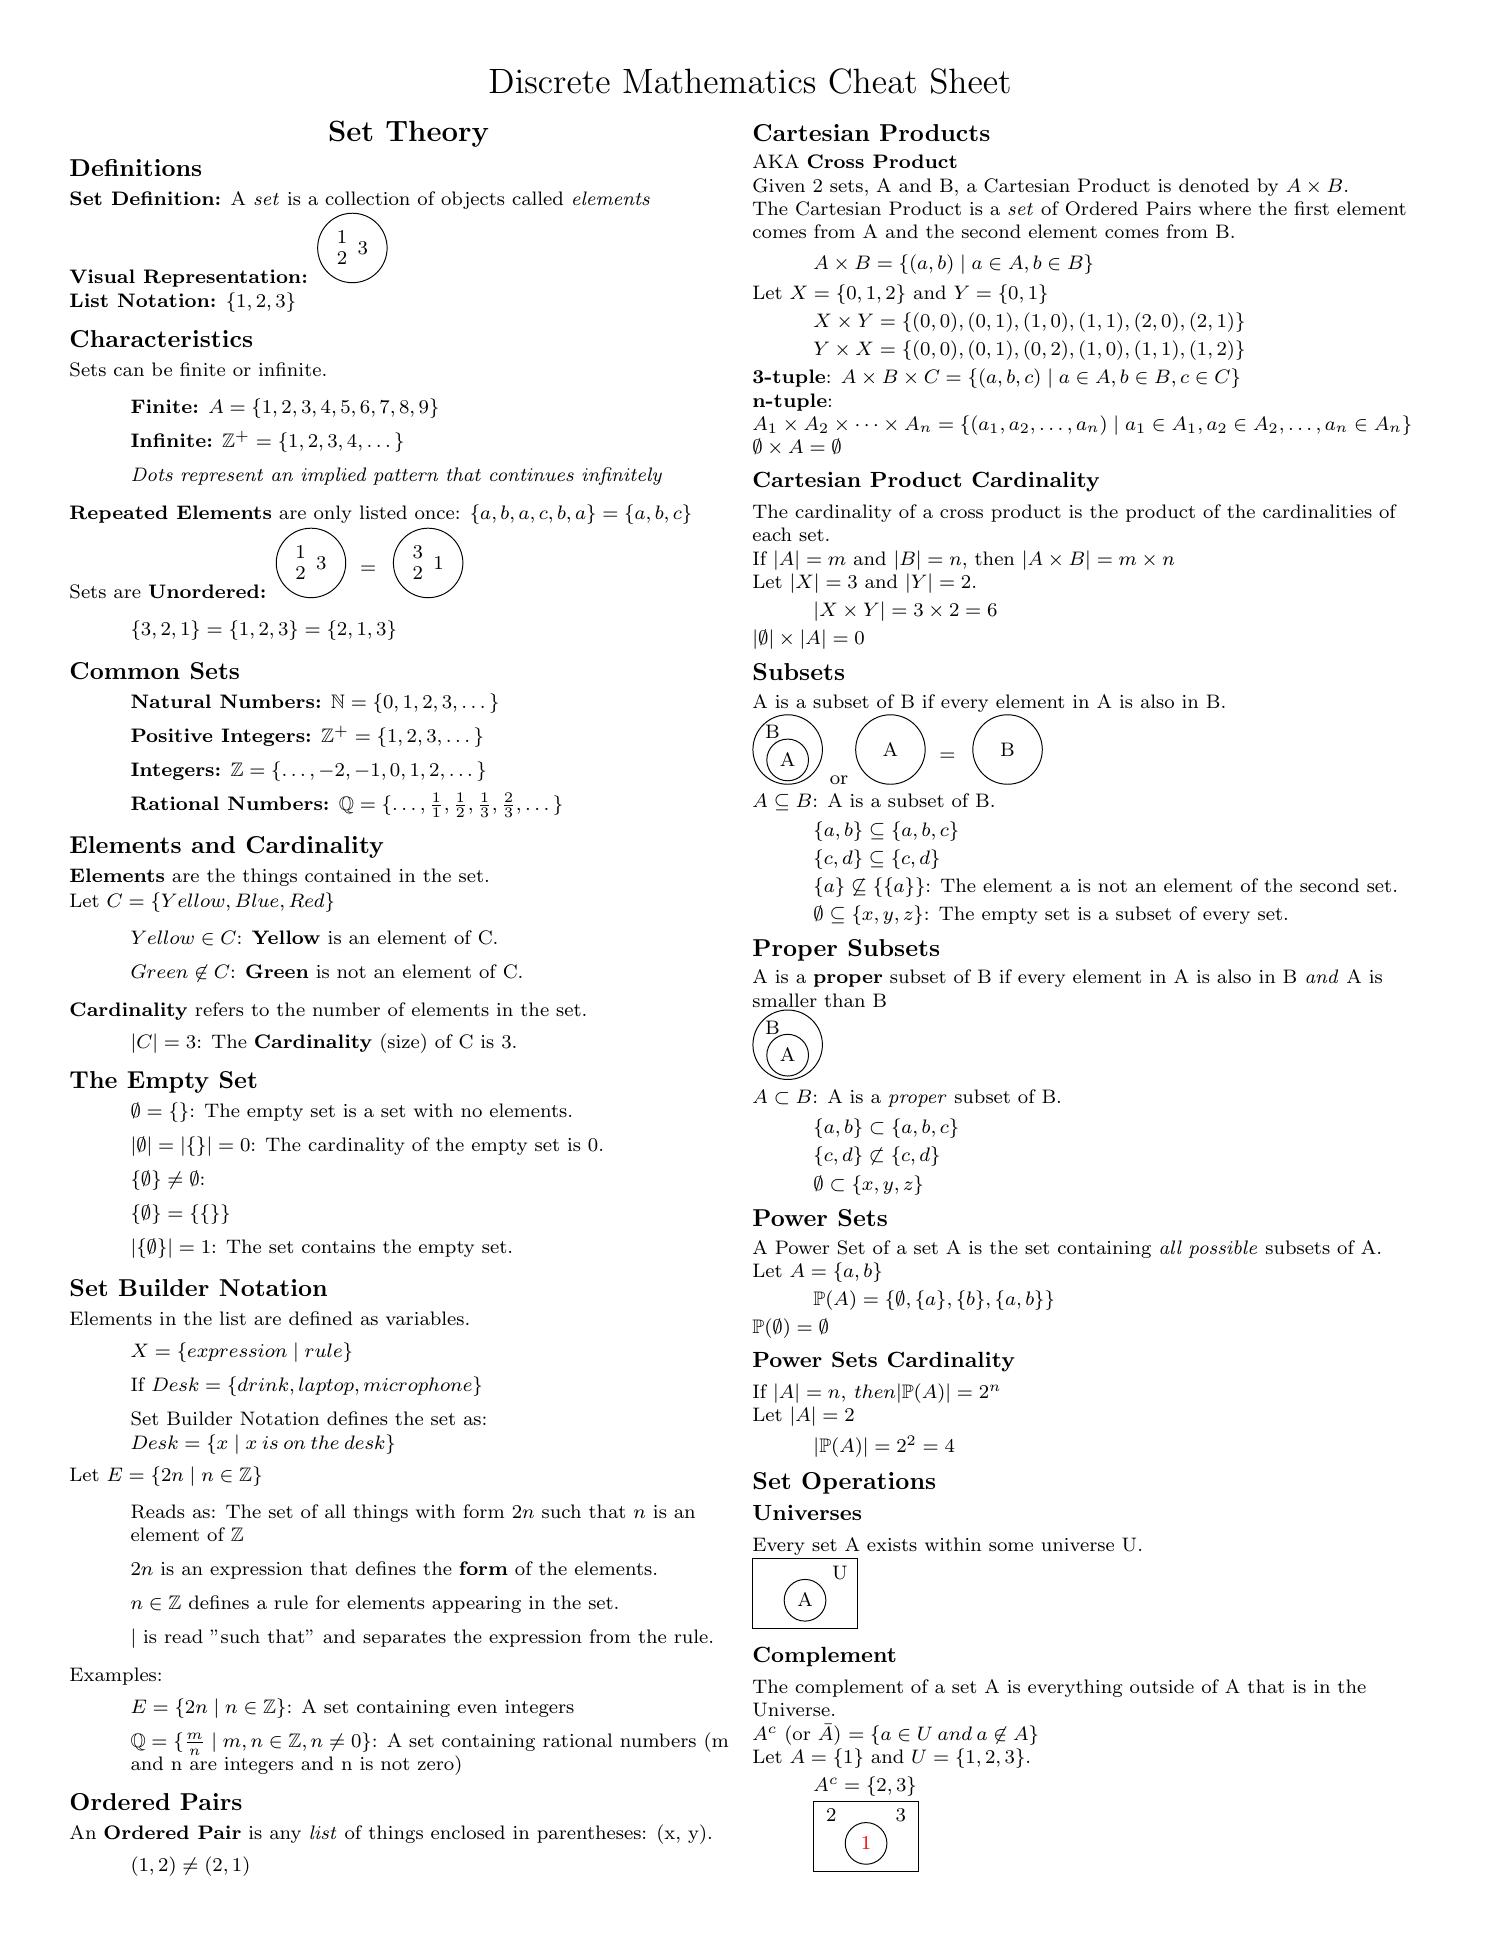 discrete-mathematics-cheat-sheet-draft-pdf-docdroid-riset